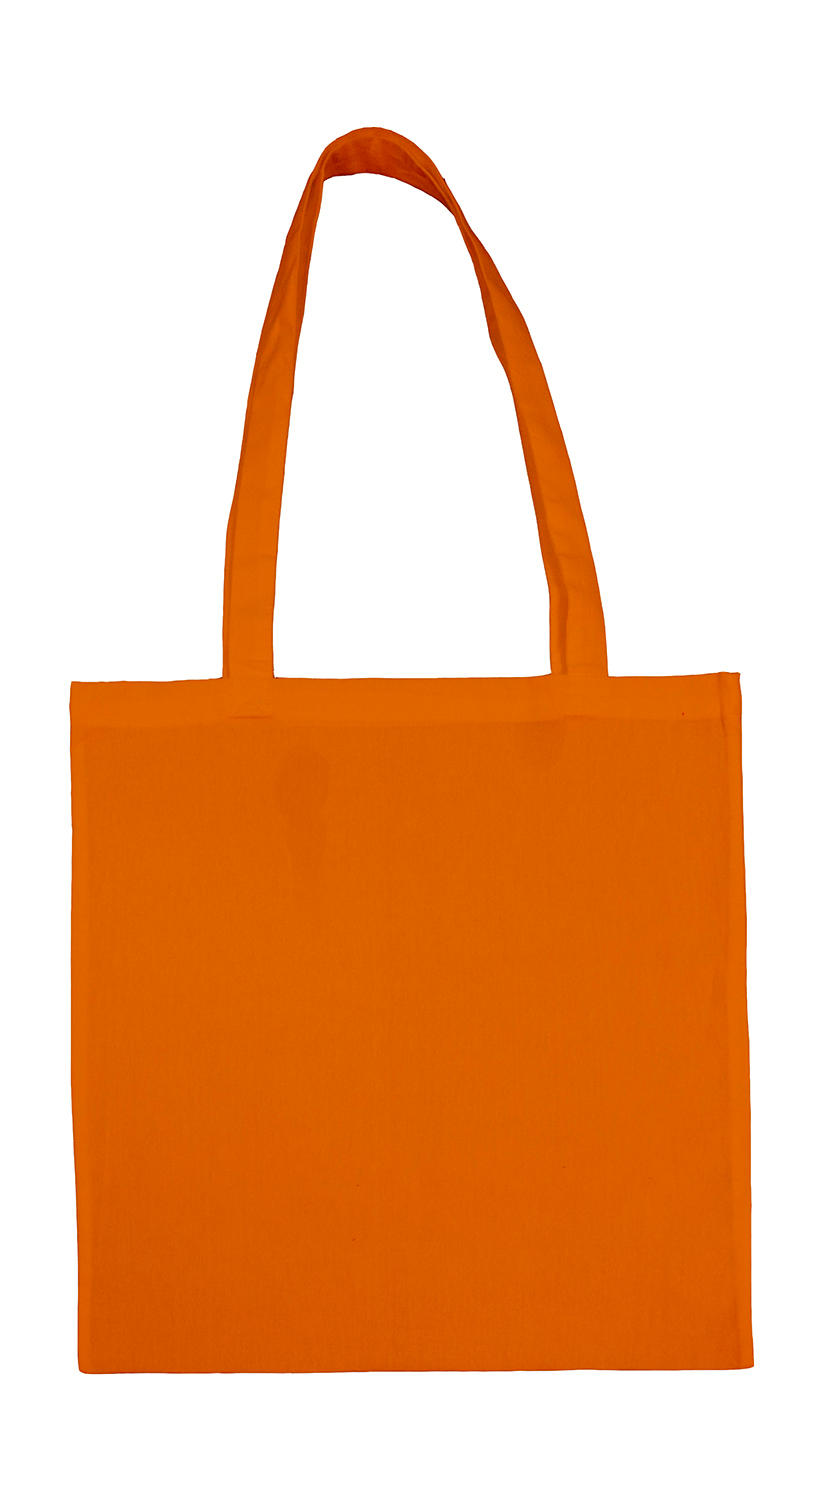  Cotton Bag LH in Farbe Tangerine